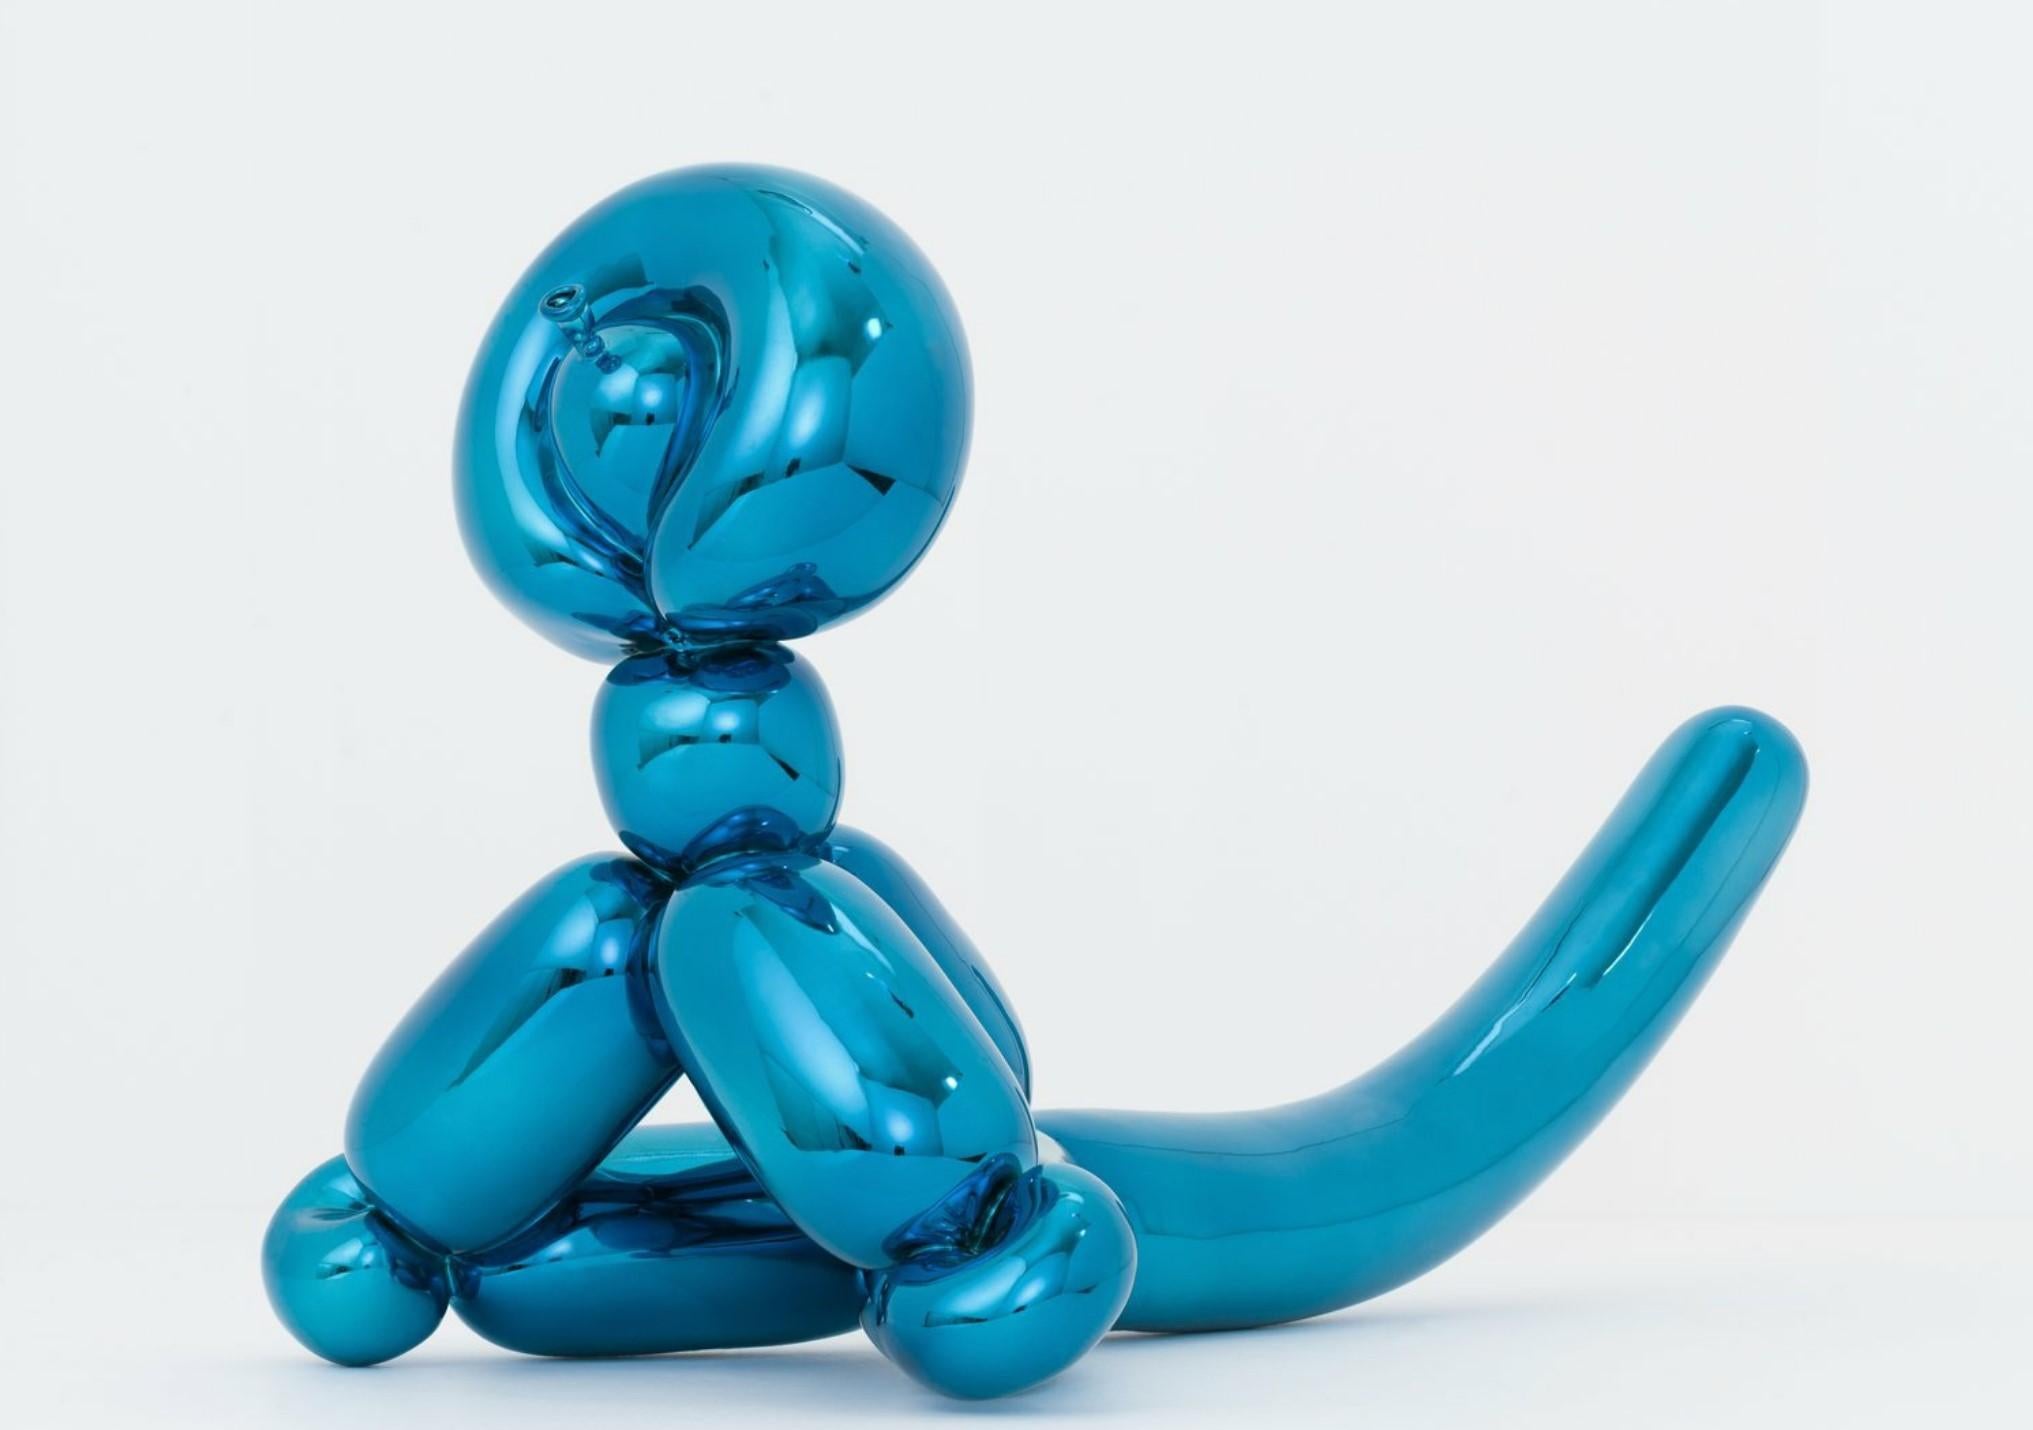 Ballon Monkey Blue - Sculpture by Jeff Koons